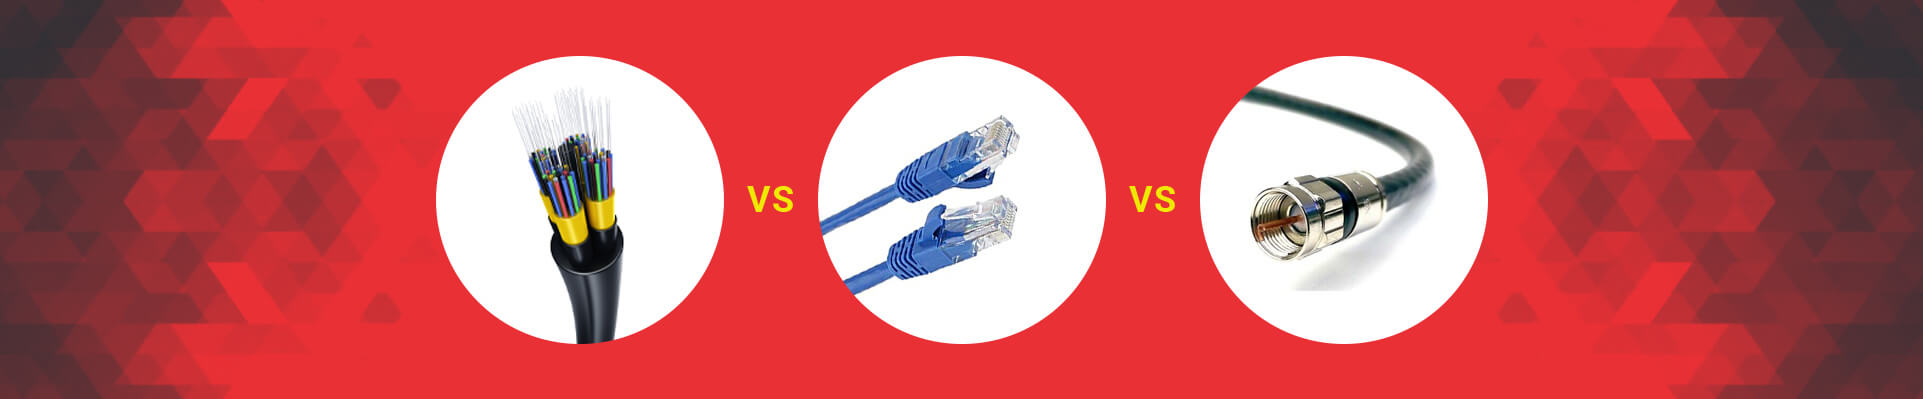 Fibernet vs DSL vs Cable: What to choose?